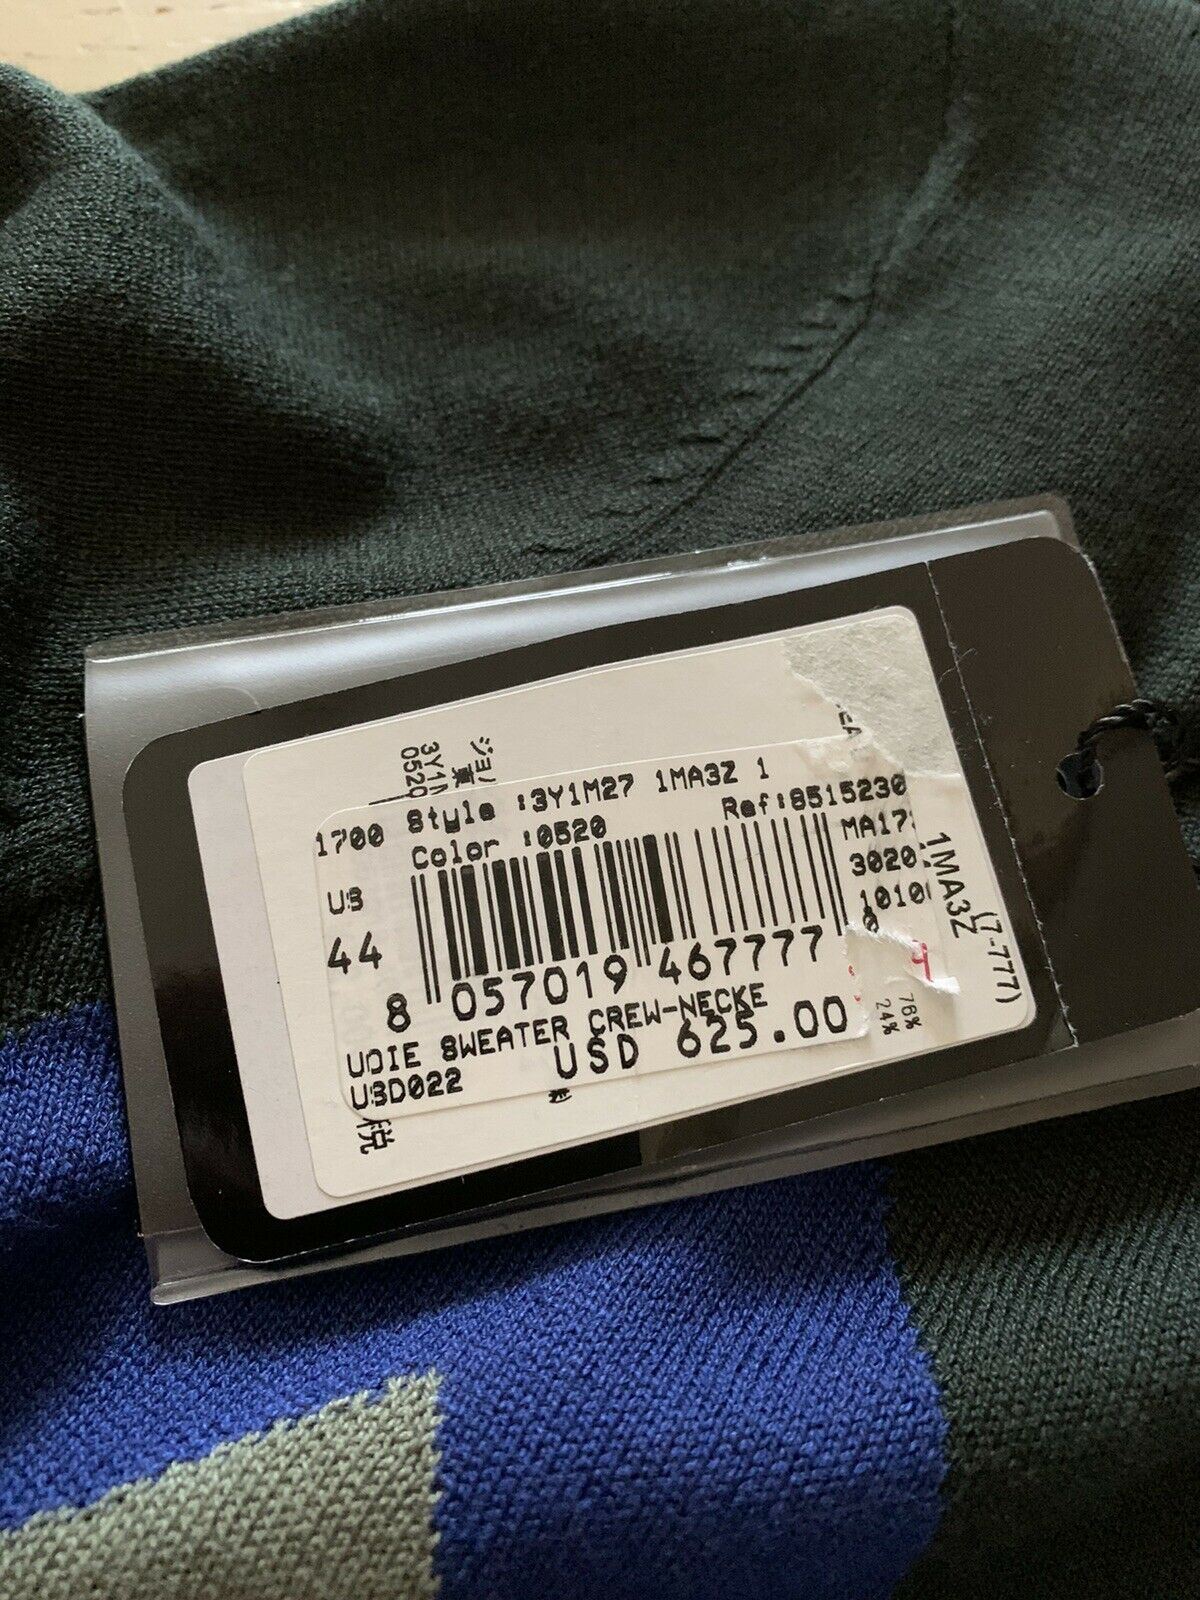 New $625 Emporio Armani Mens Crewneck Sweater Black/Blue/Green Size XS ( 44 Eu )